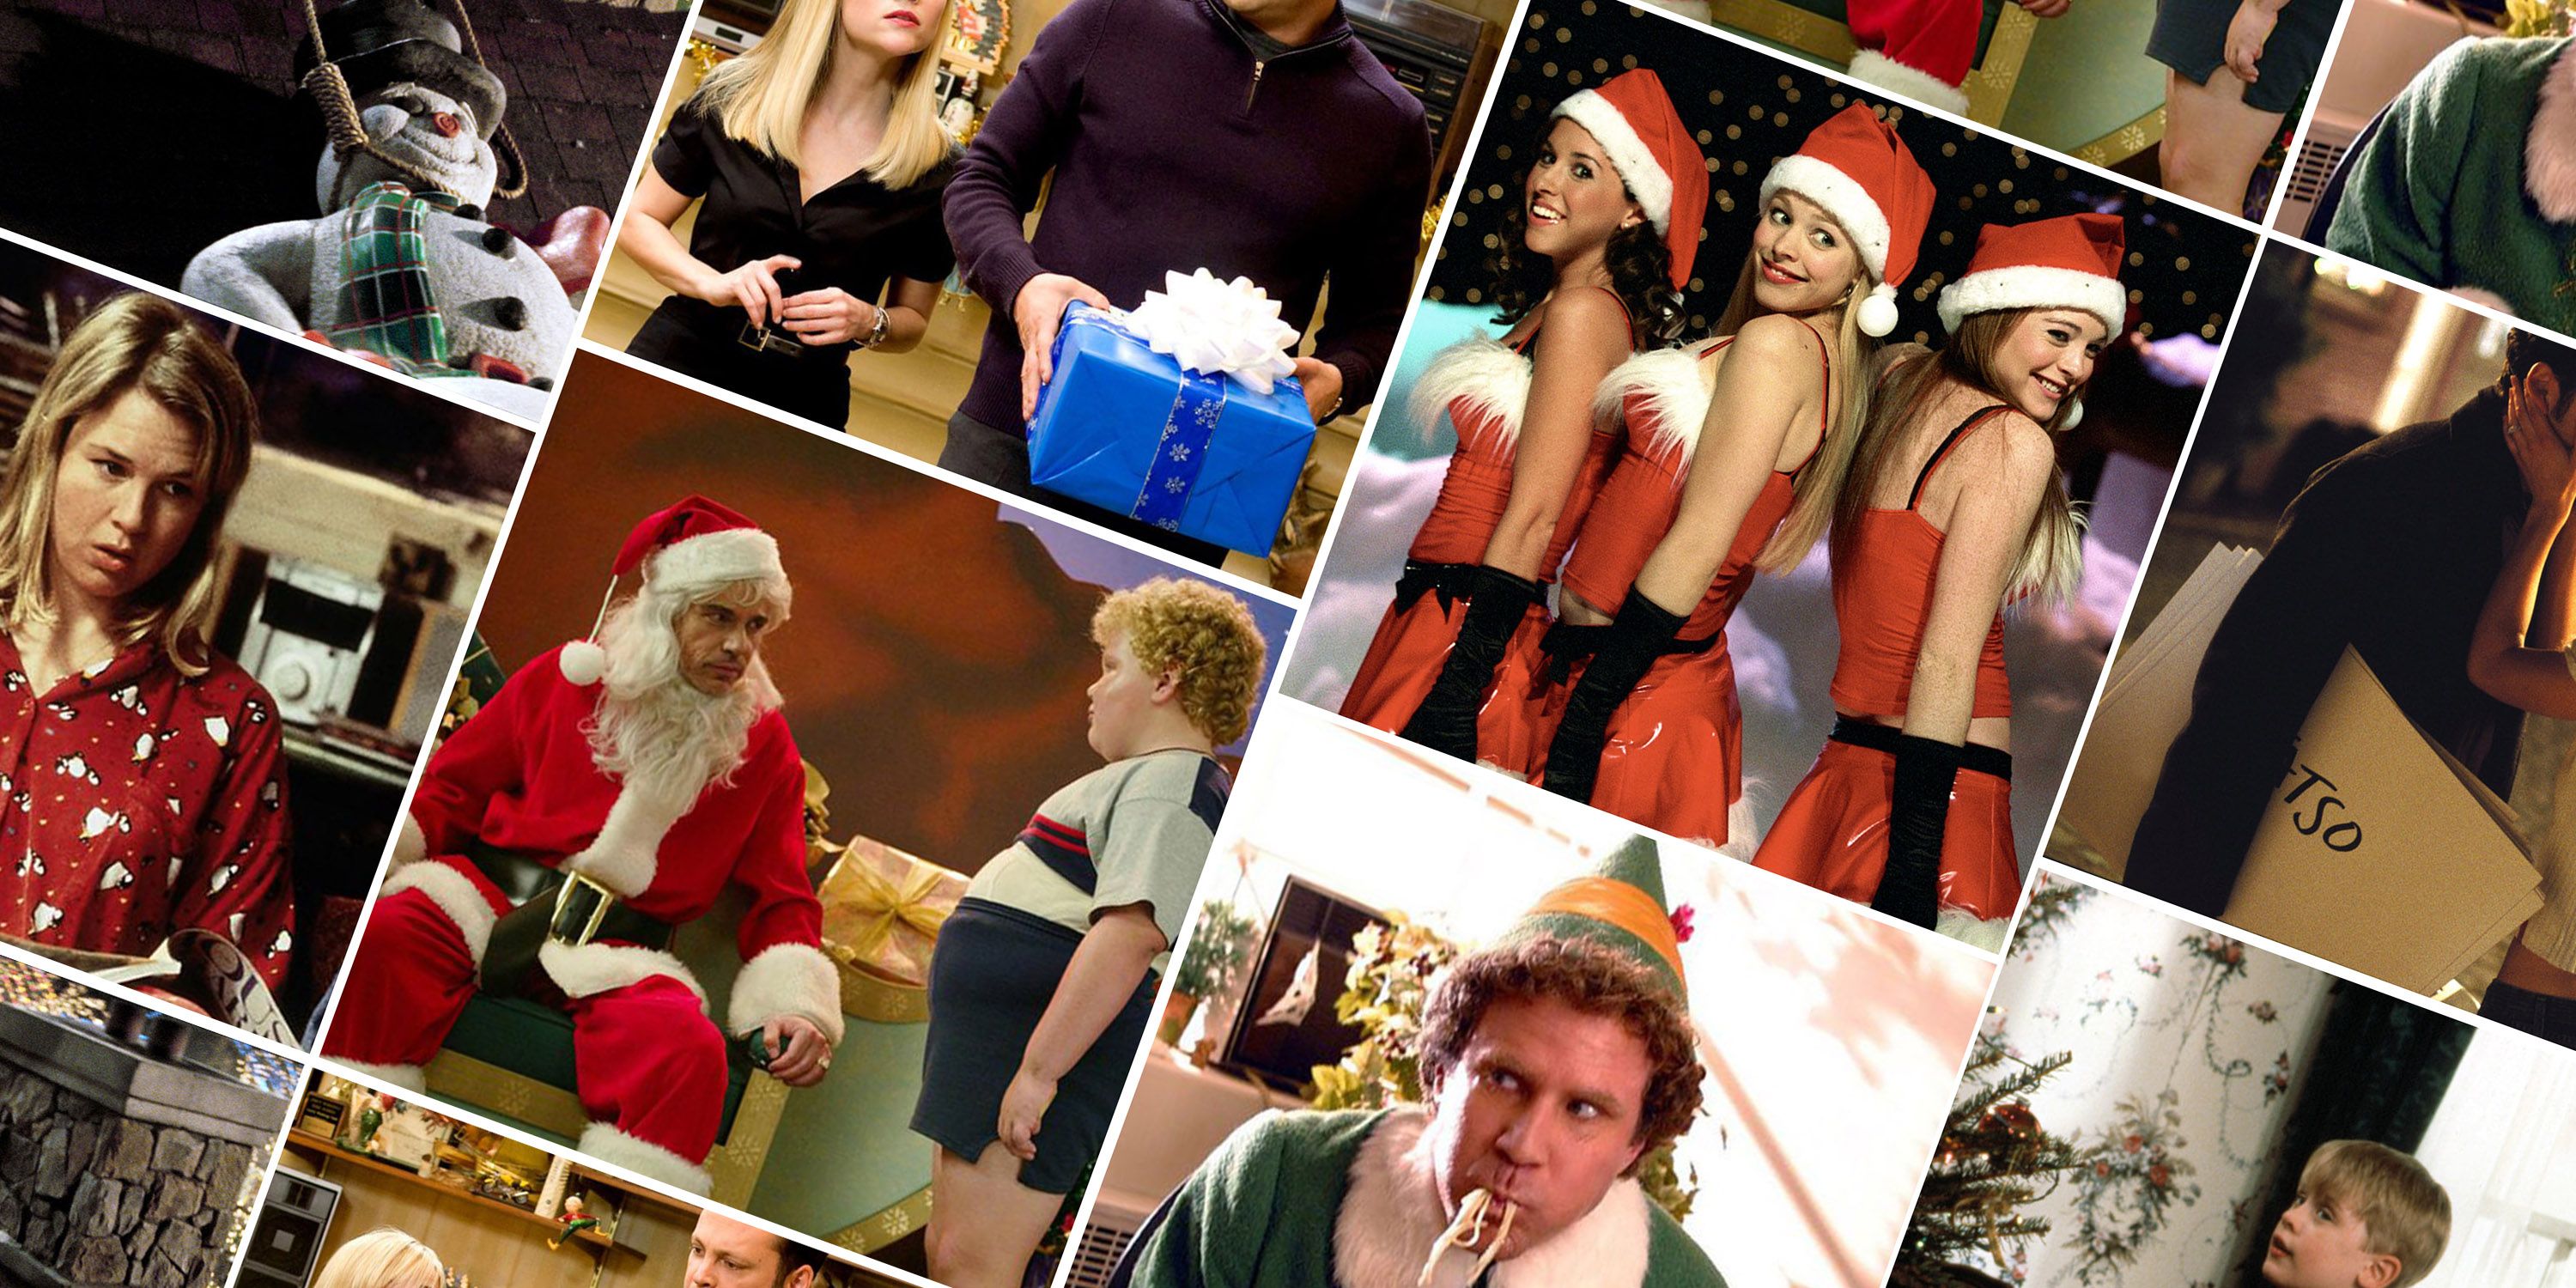 Santa Claus Cartoons Sex Videos Free - 50 Best Funny Christmas Movies 2022 - Top Christmas Comedy Movies